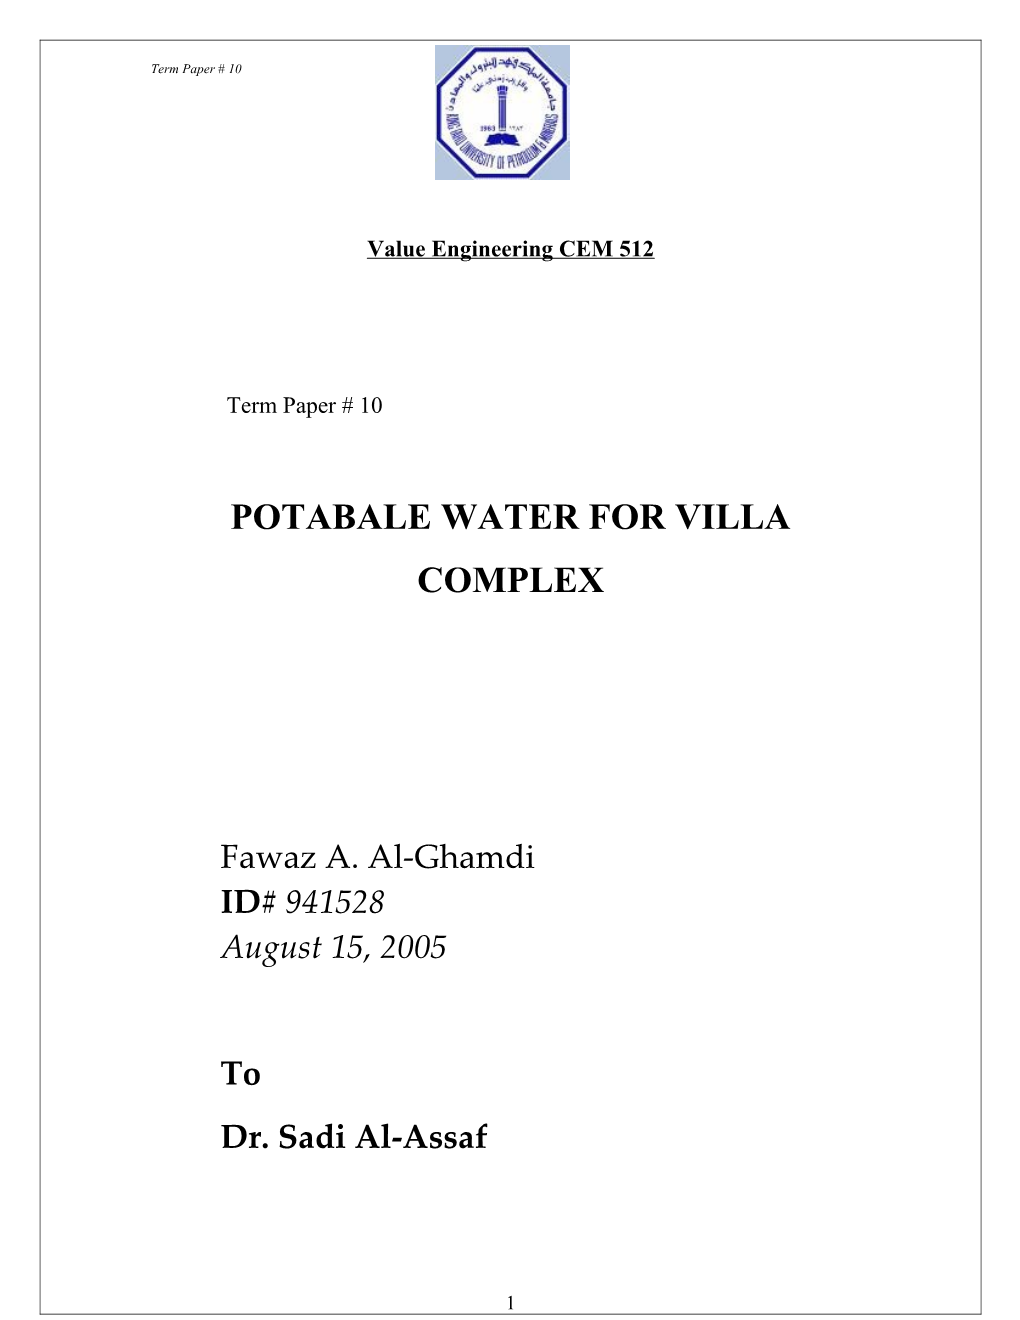 Potabale Water for Villa Complex